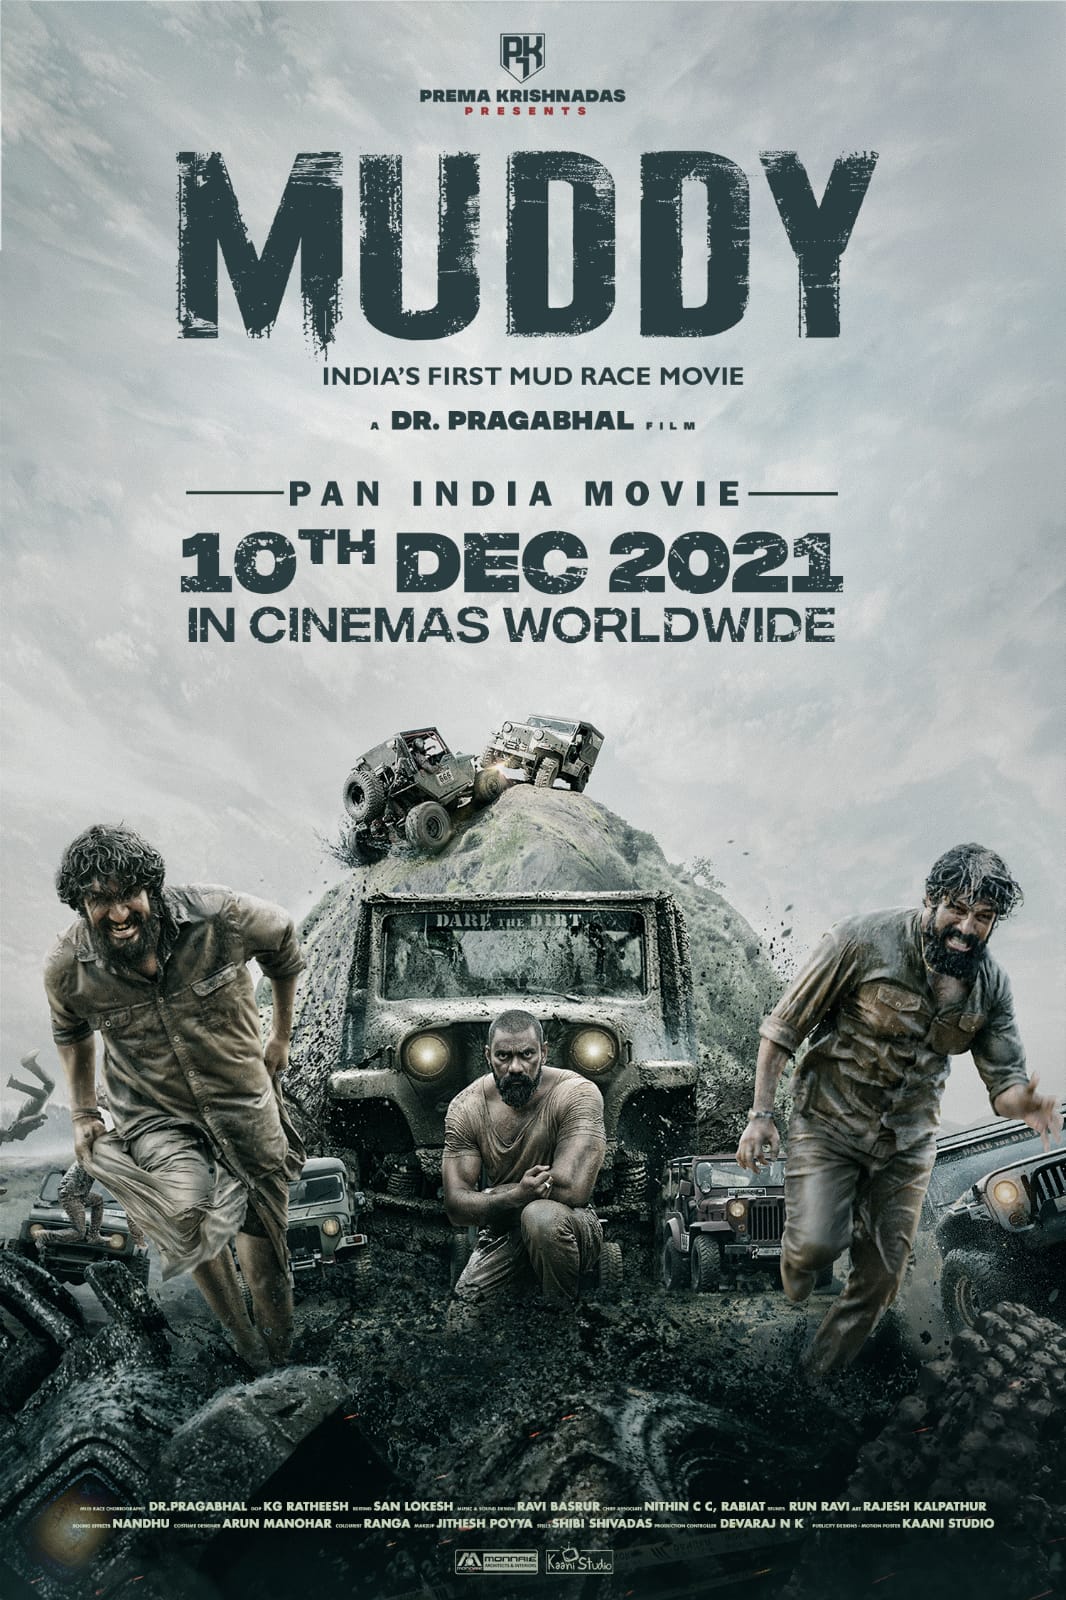 Pan Indian mud race film “MUDDY” Releasing Date